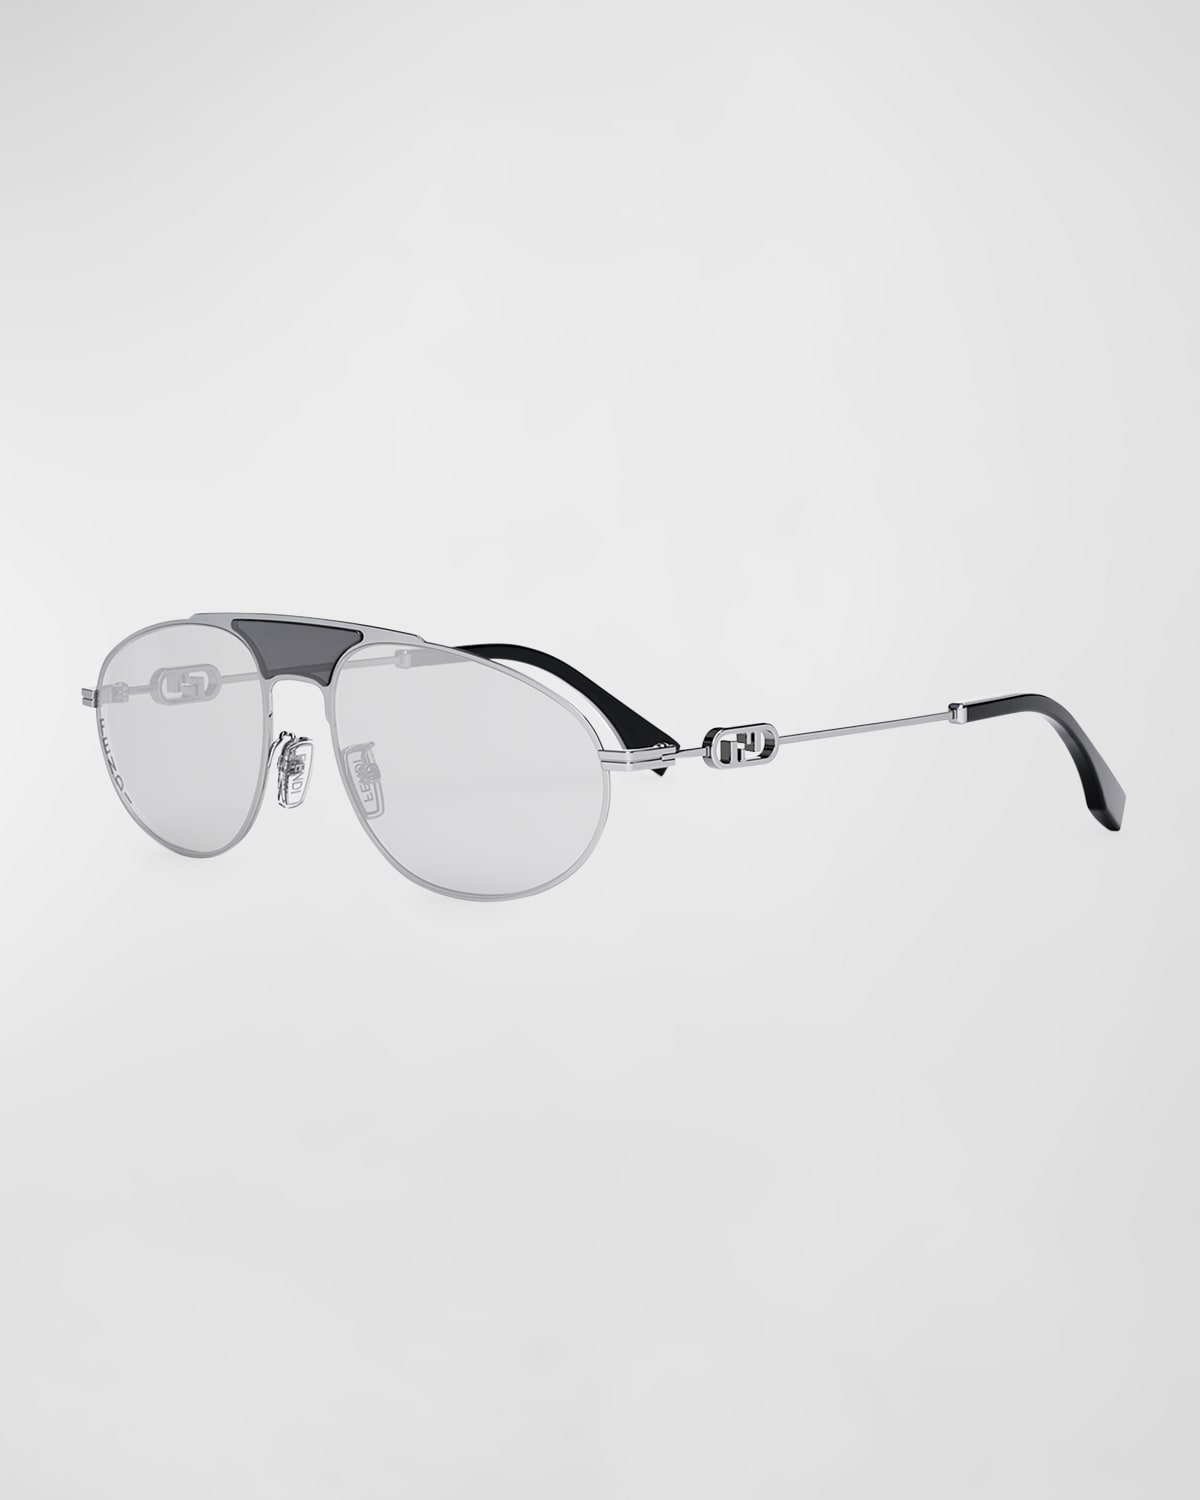 Fendi Men's Double-bridge Metal Oval Sunglasses In Ruthenium Smoke